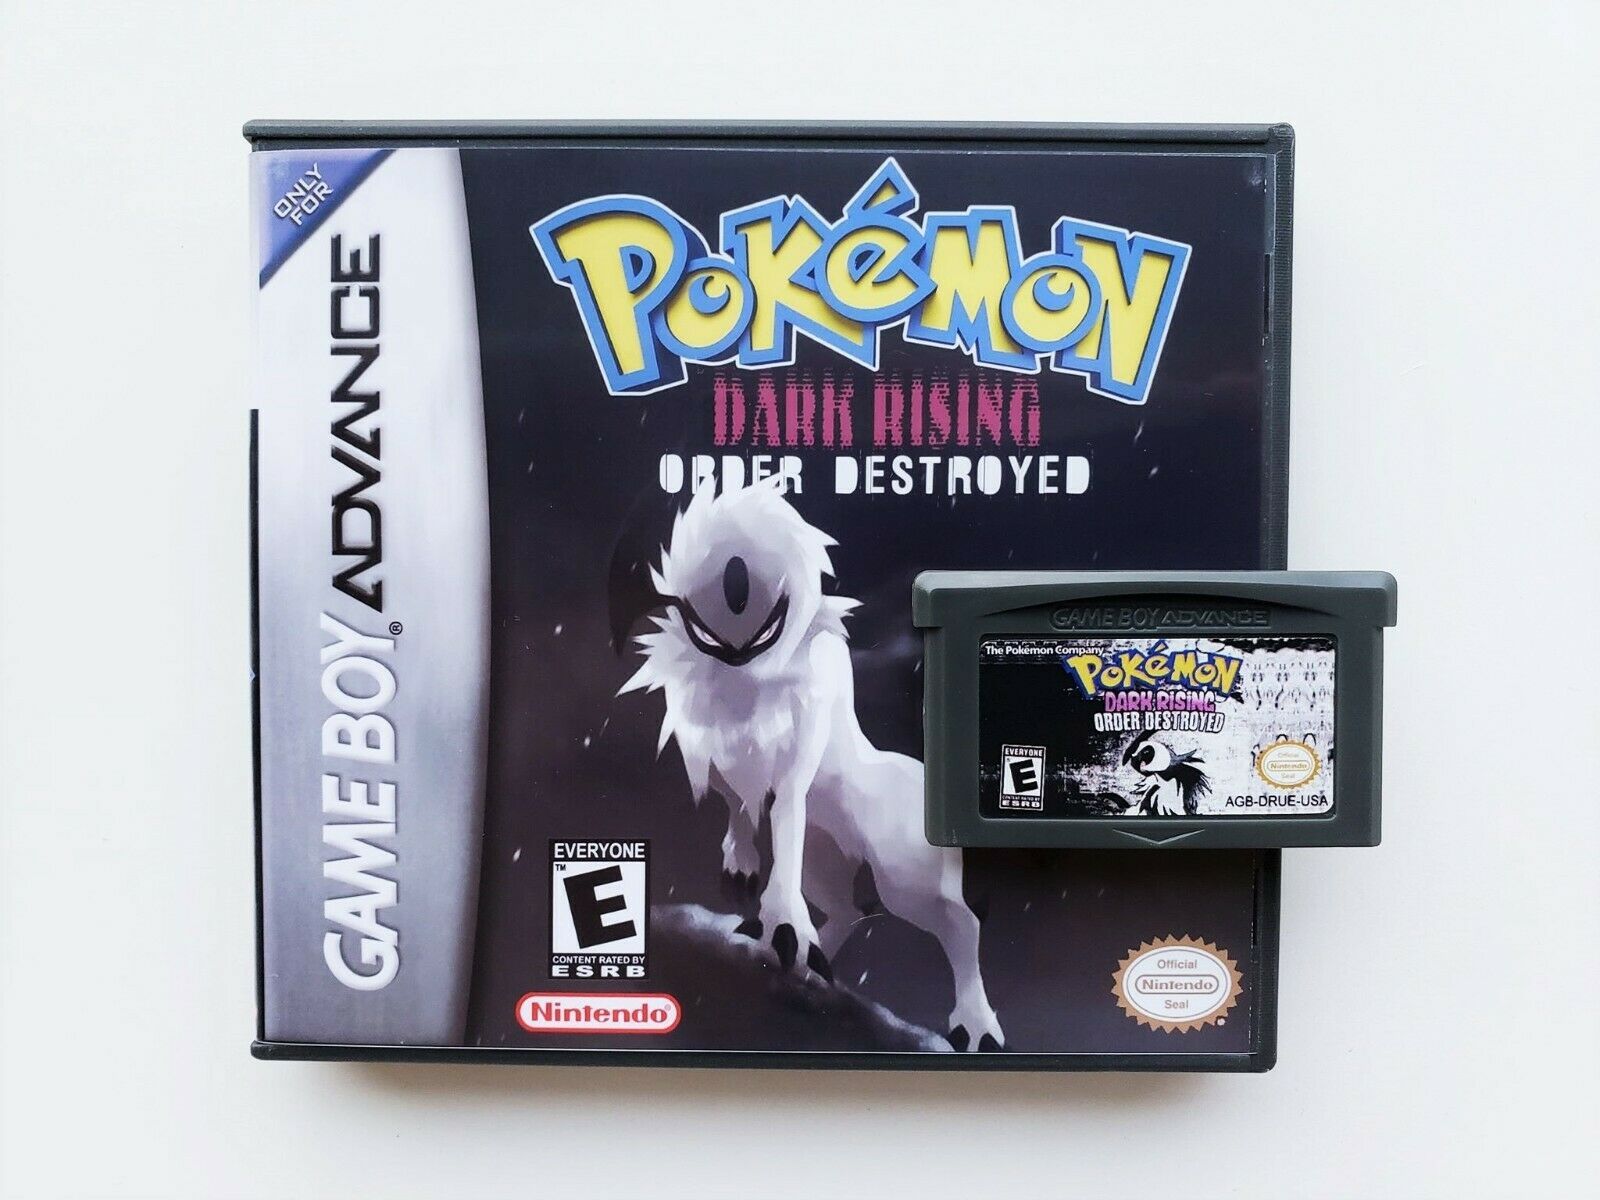 Pokemon Dark Rising Order Destroyed Game / Case - Gameboy Advance (GBA) USA